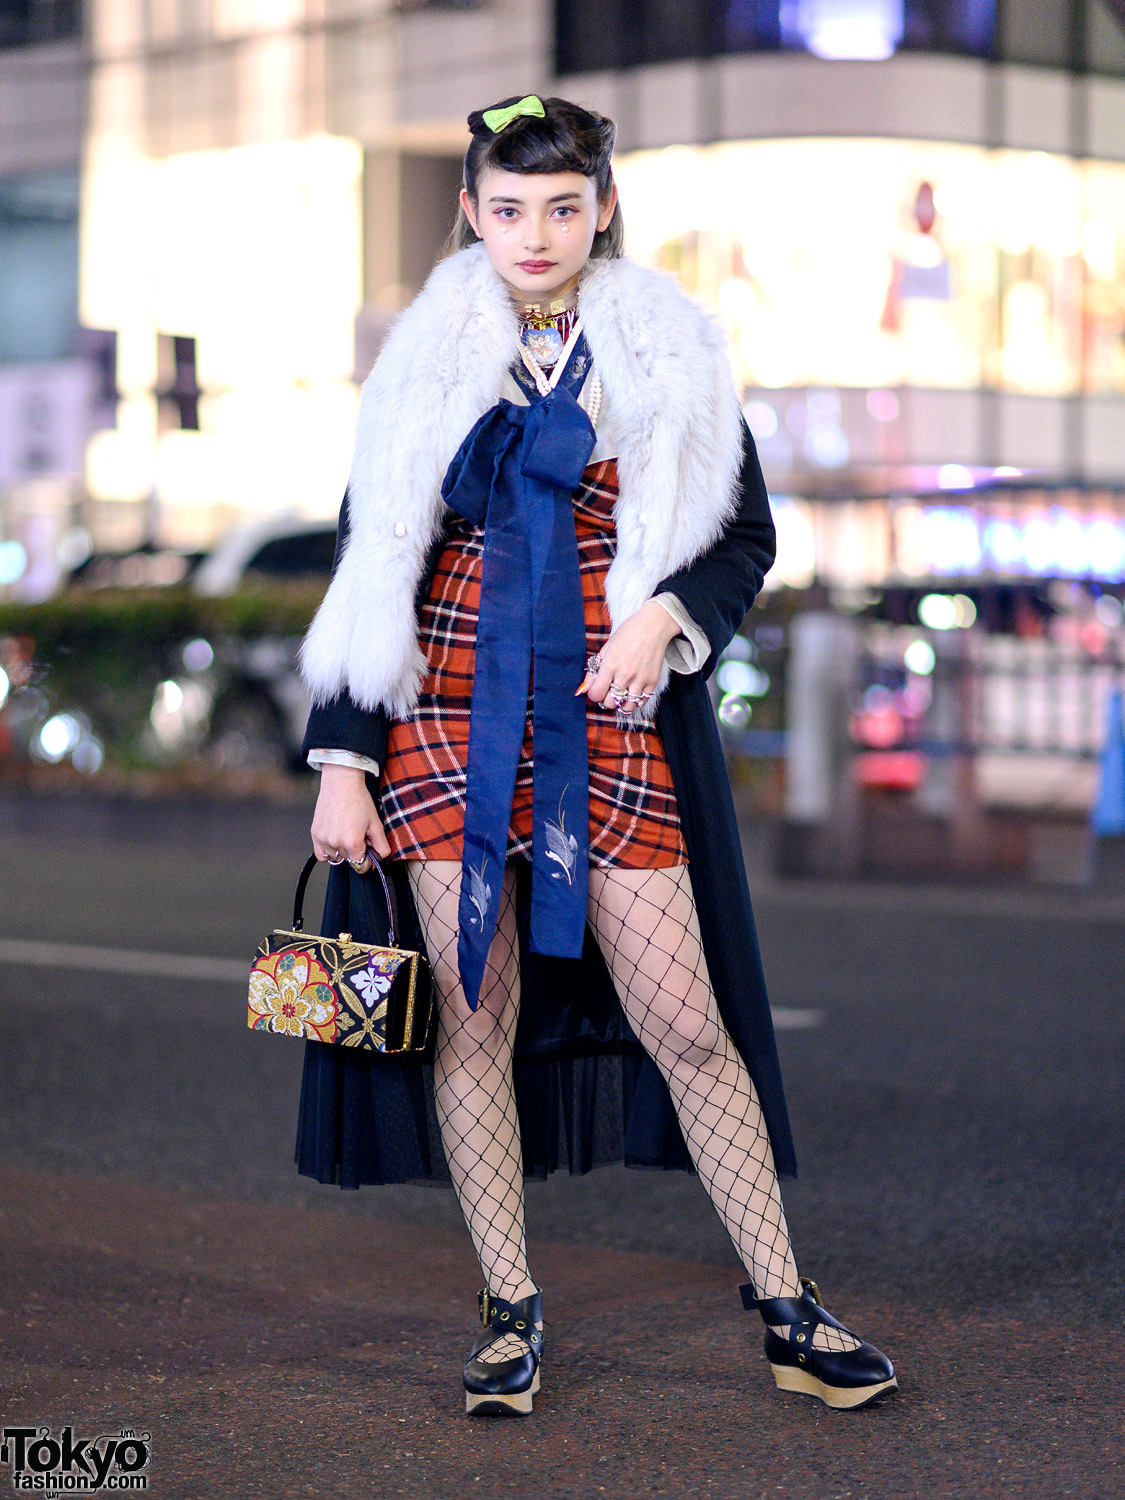 Harajuku Streetwear Style w/ Snidel Coat & Plaid Dress, Fishnets, Vivienne Westwood Rocking Horse Shoes & Kimono Purse